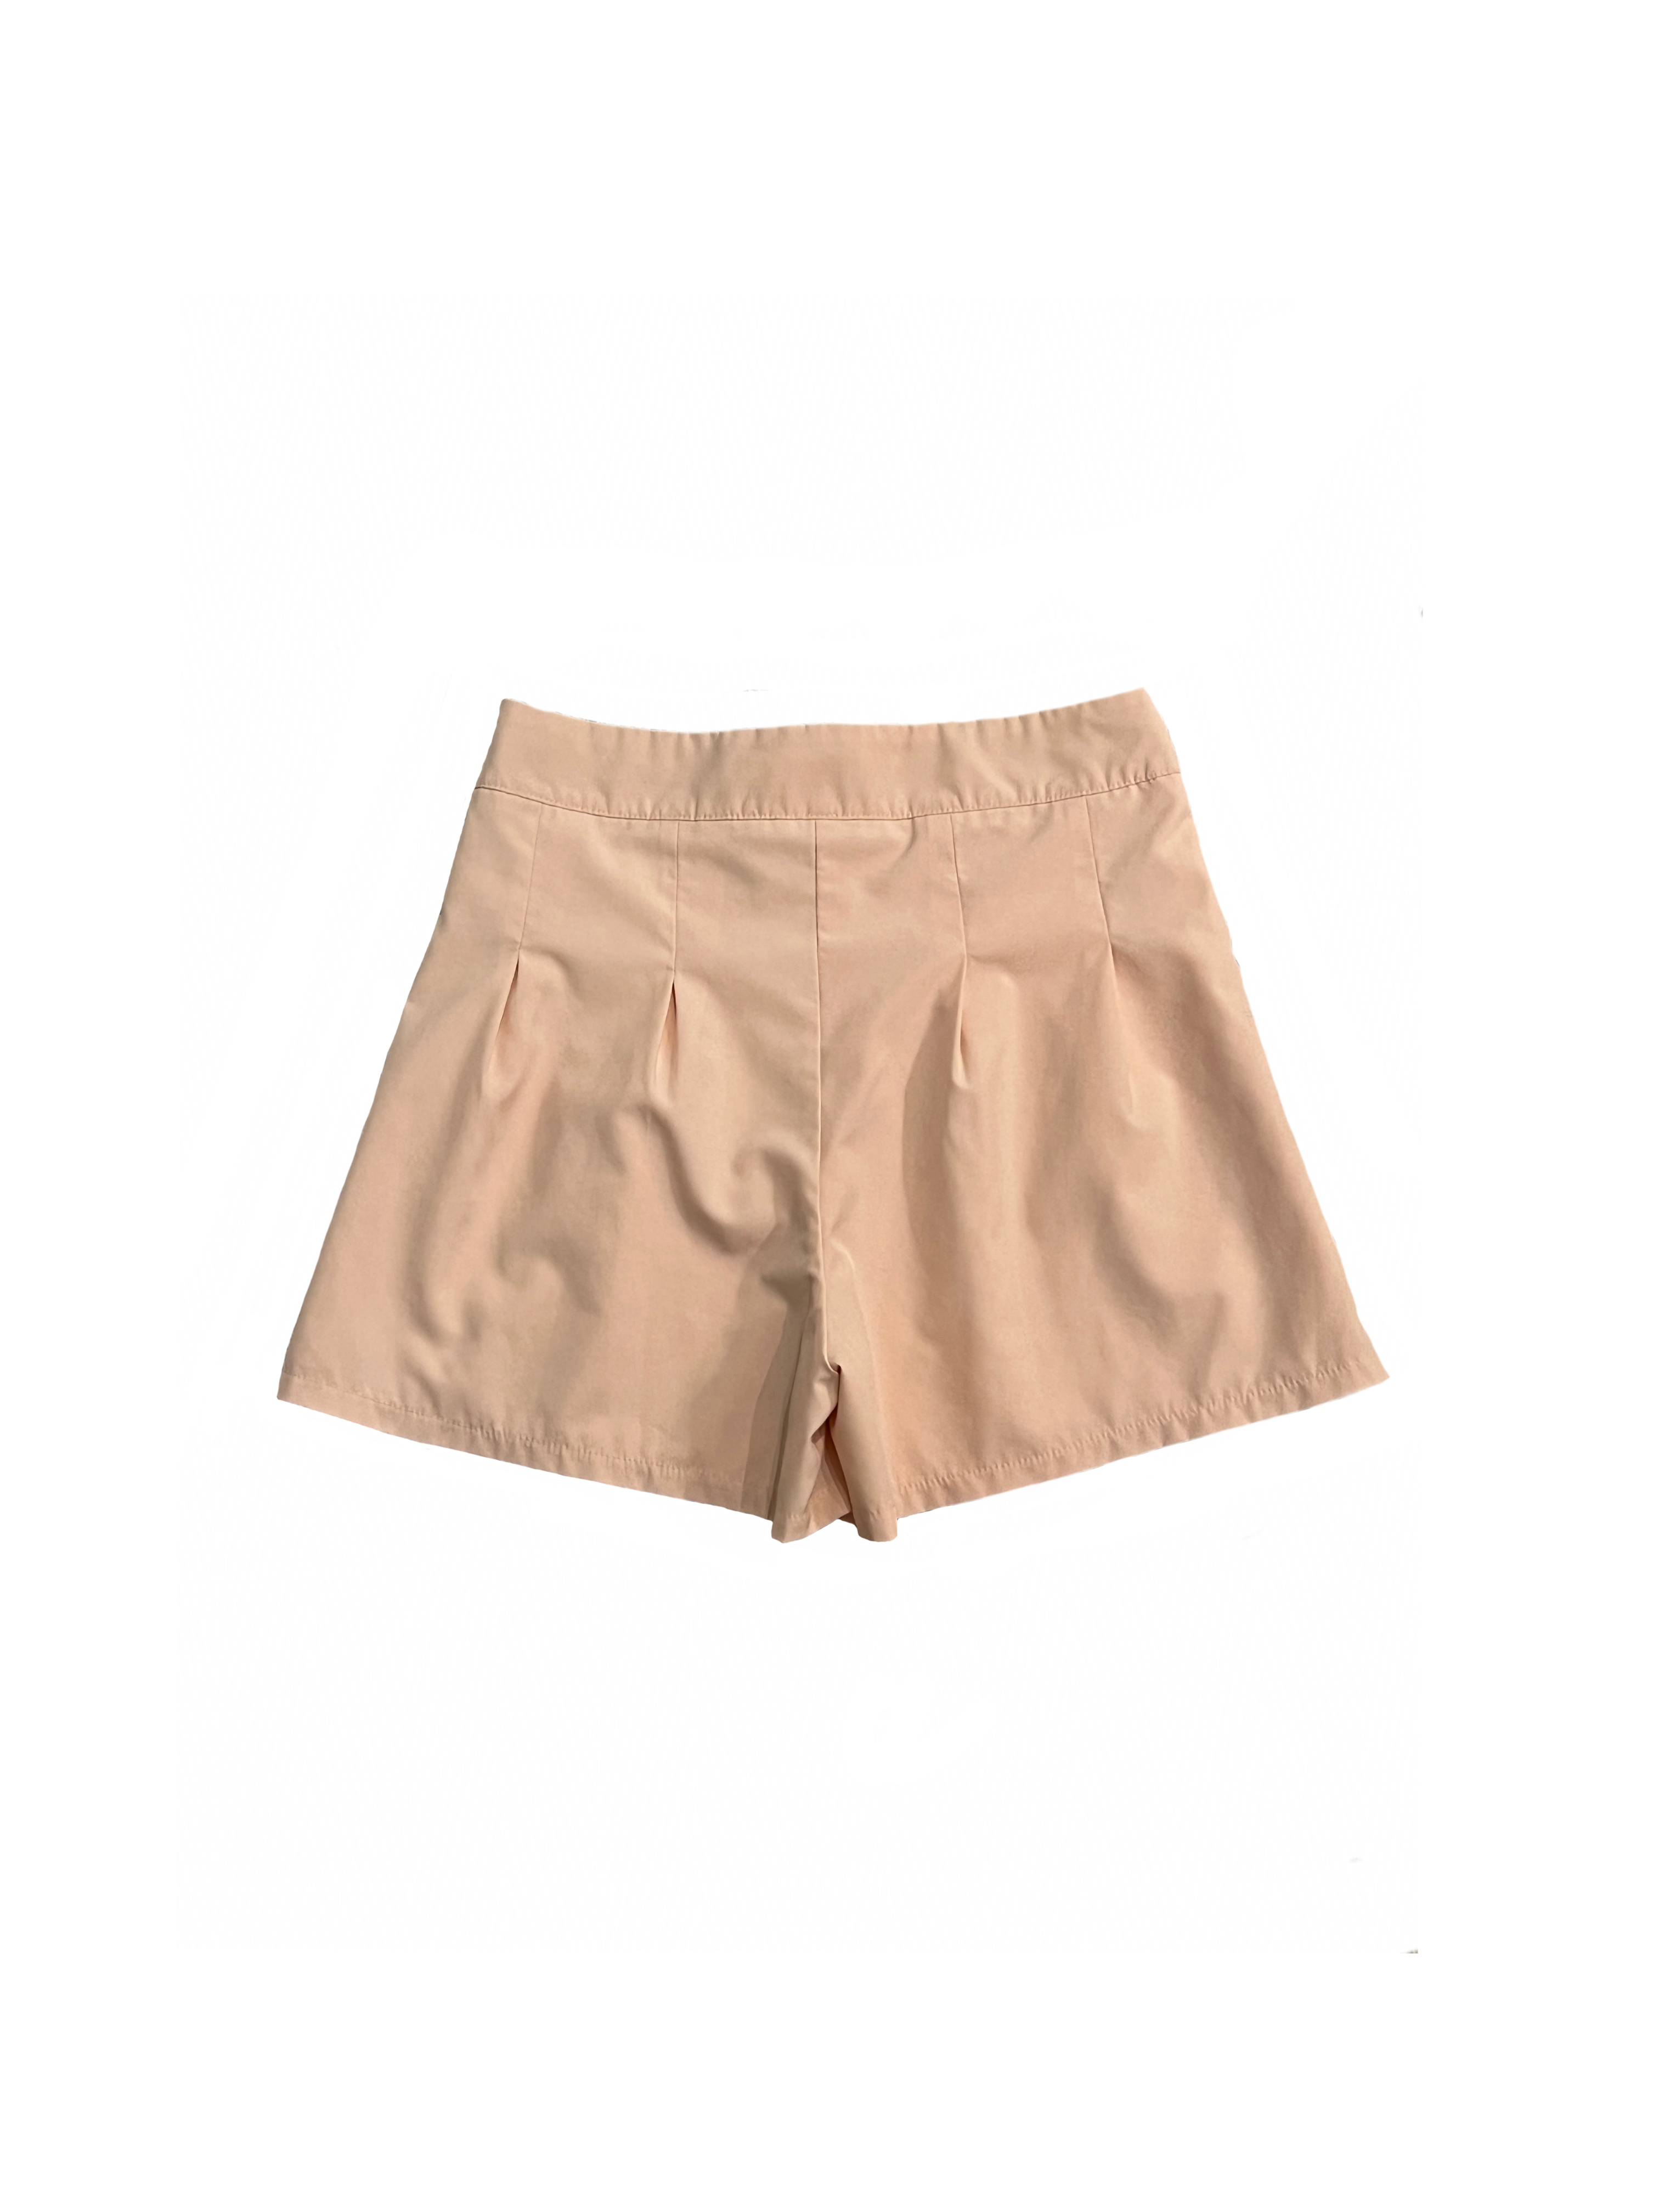 Parfait Pleated Shorts in Peach